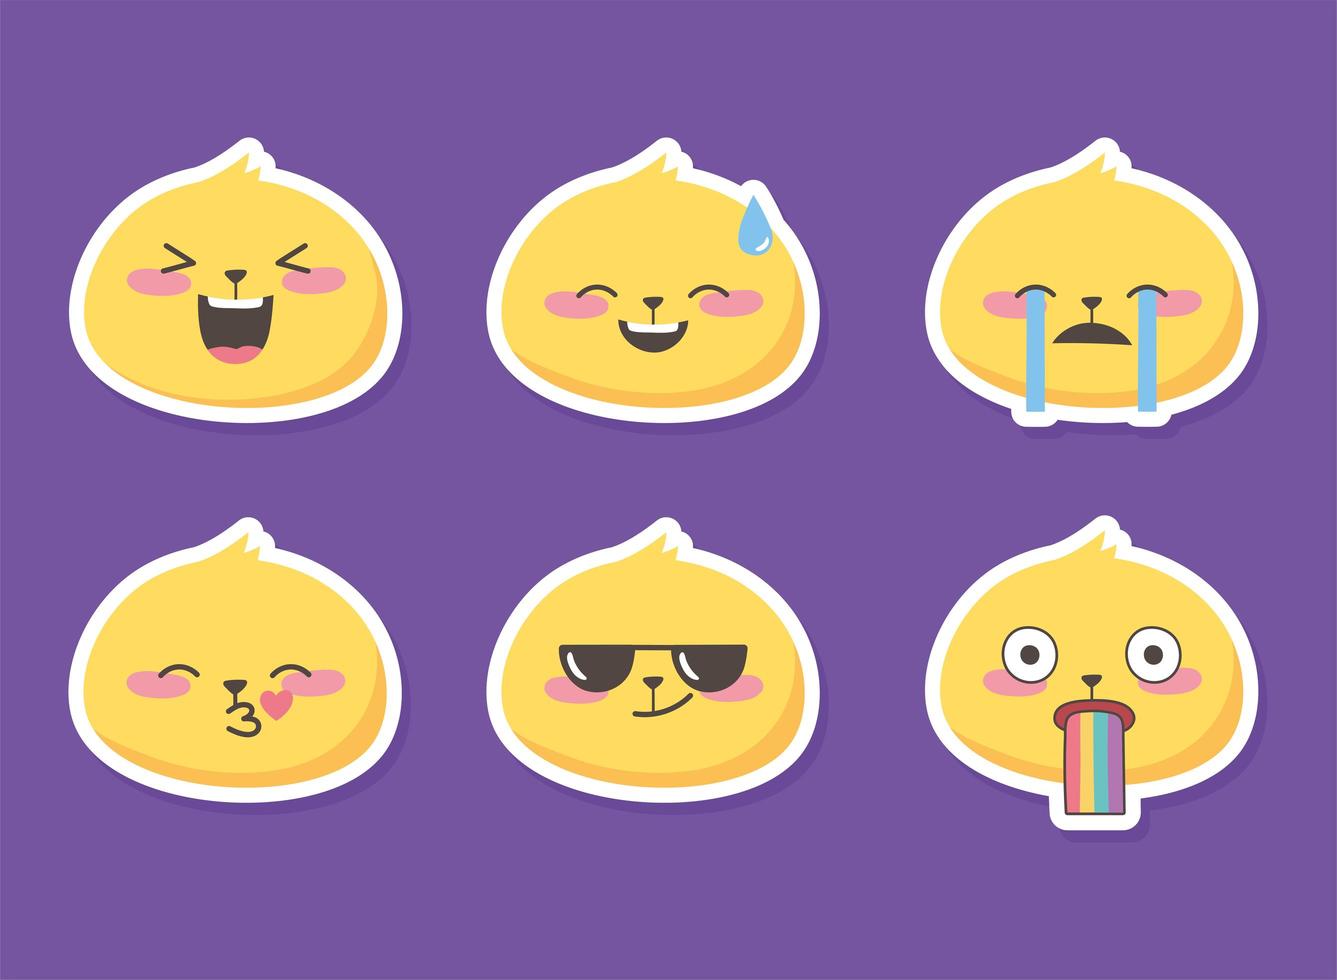 social media emoji expressions faces cartoon collection vector